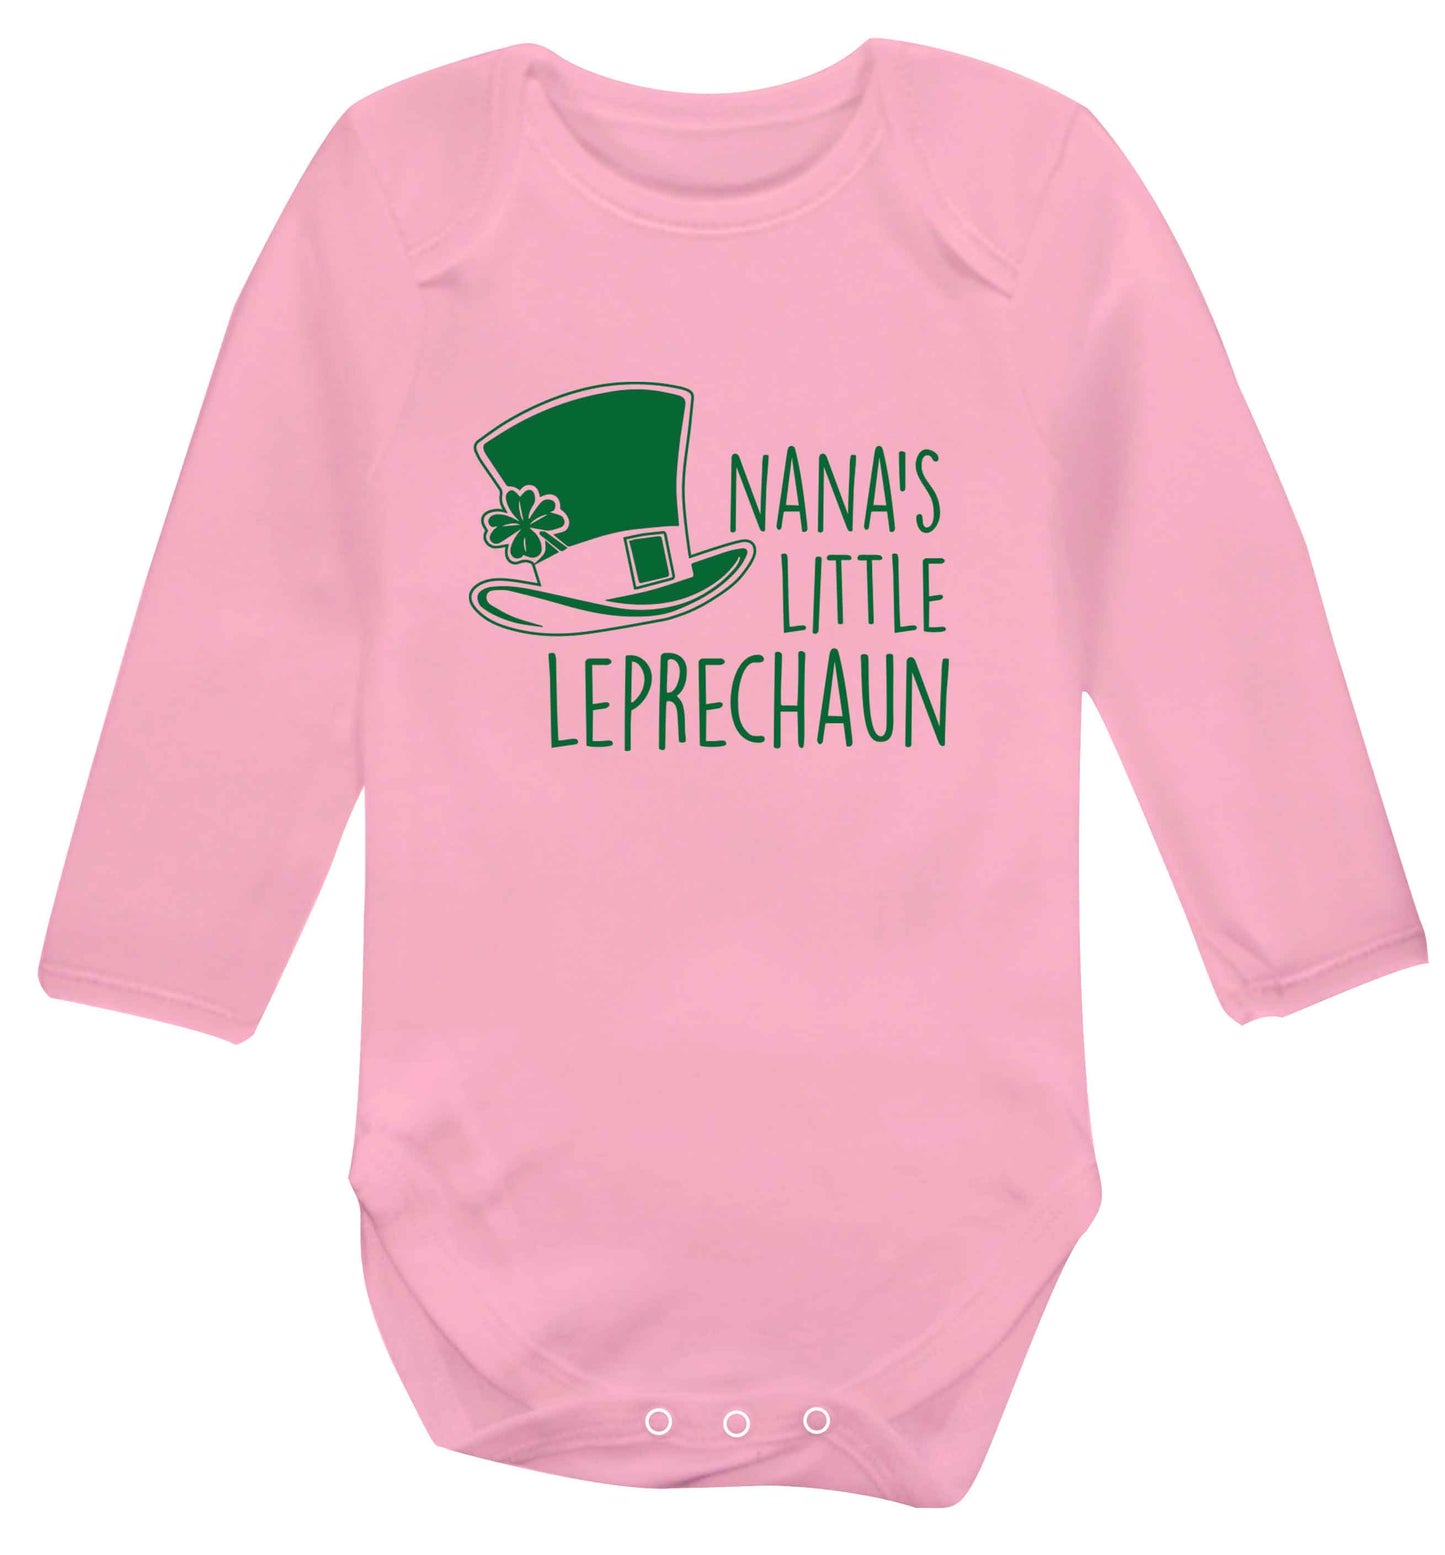 Nana's little leprechaun baby vest long sleeved pale pink 6-12 months